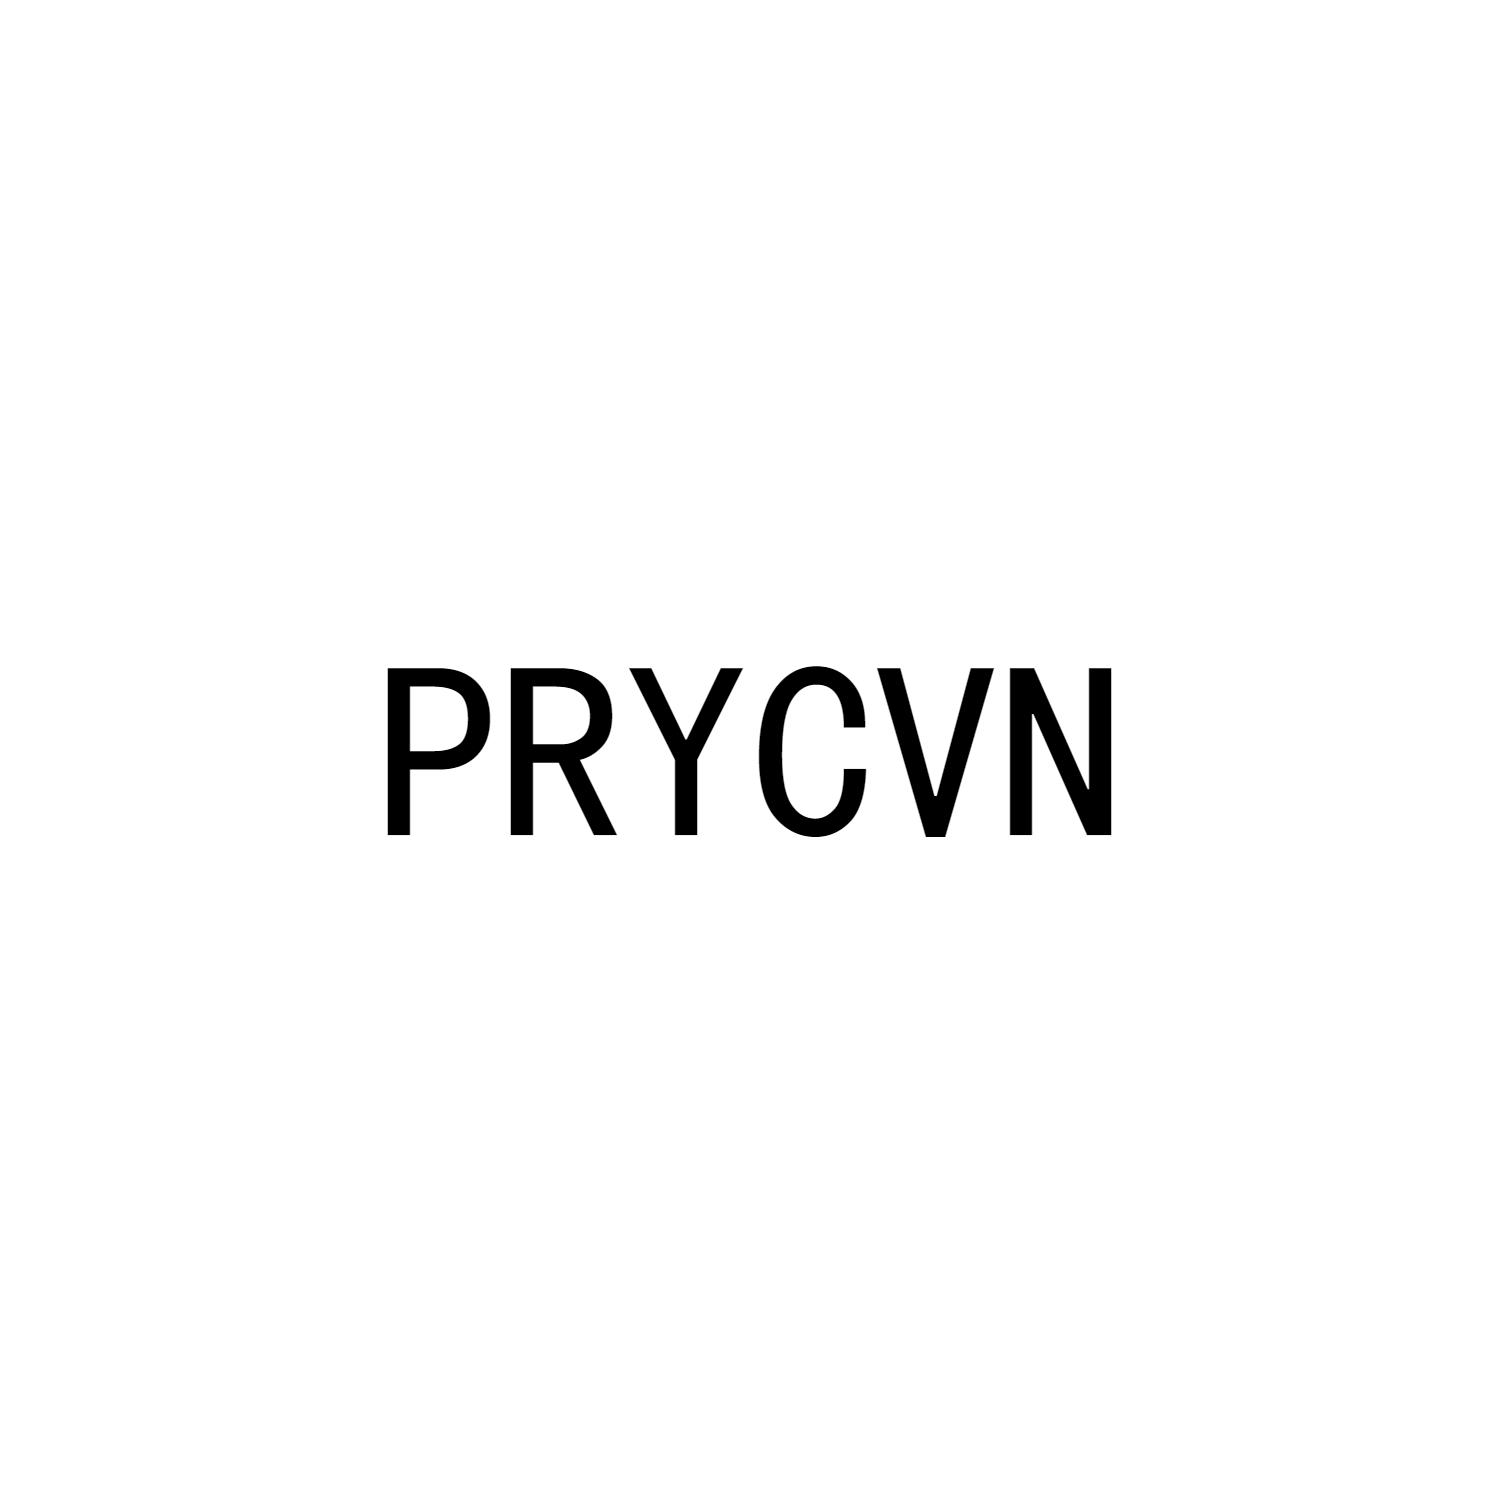 PRYCVN